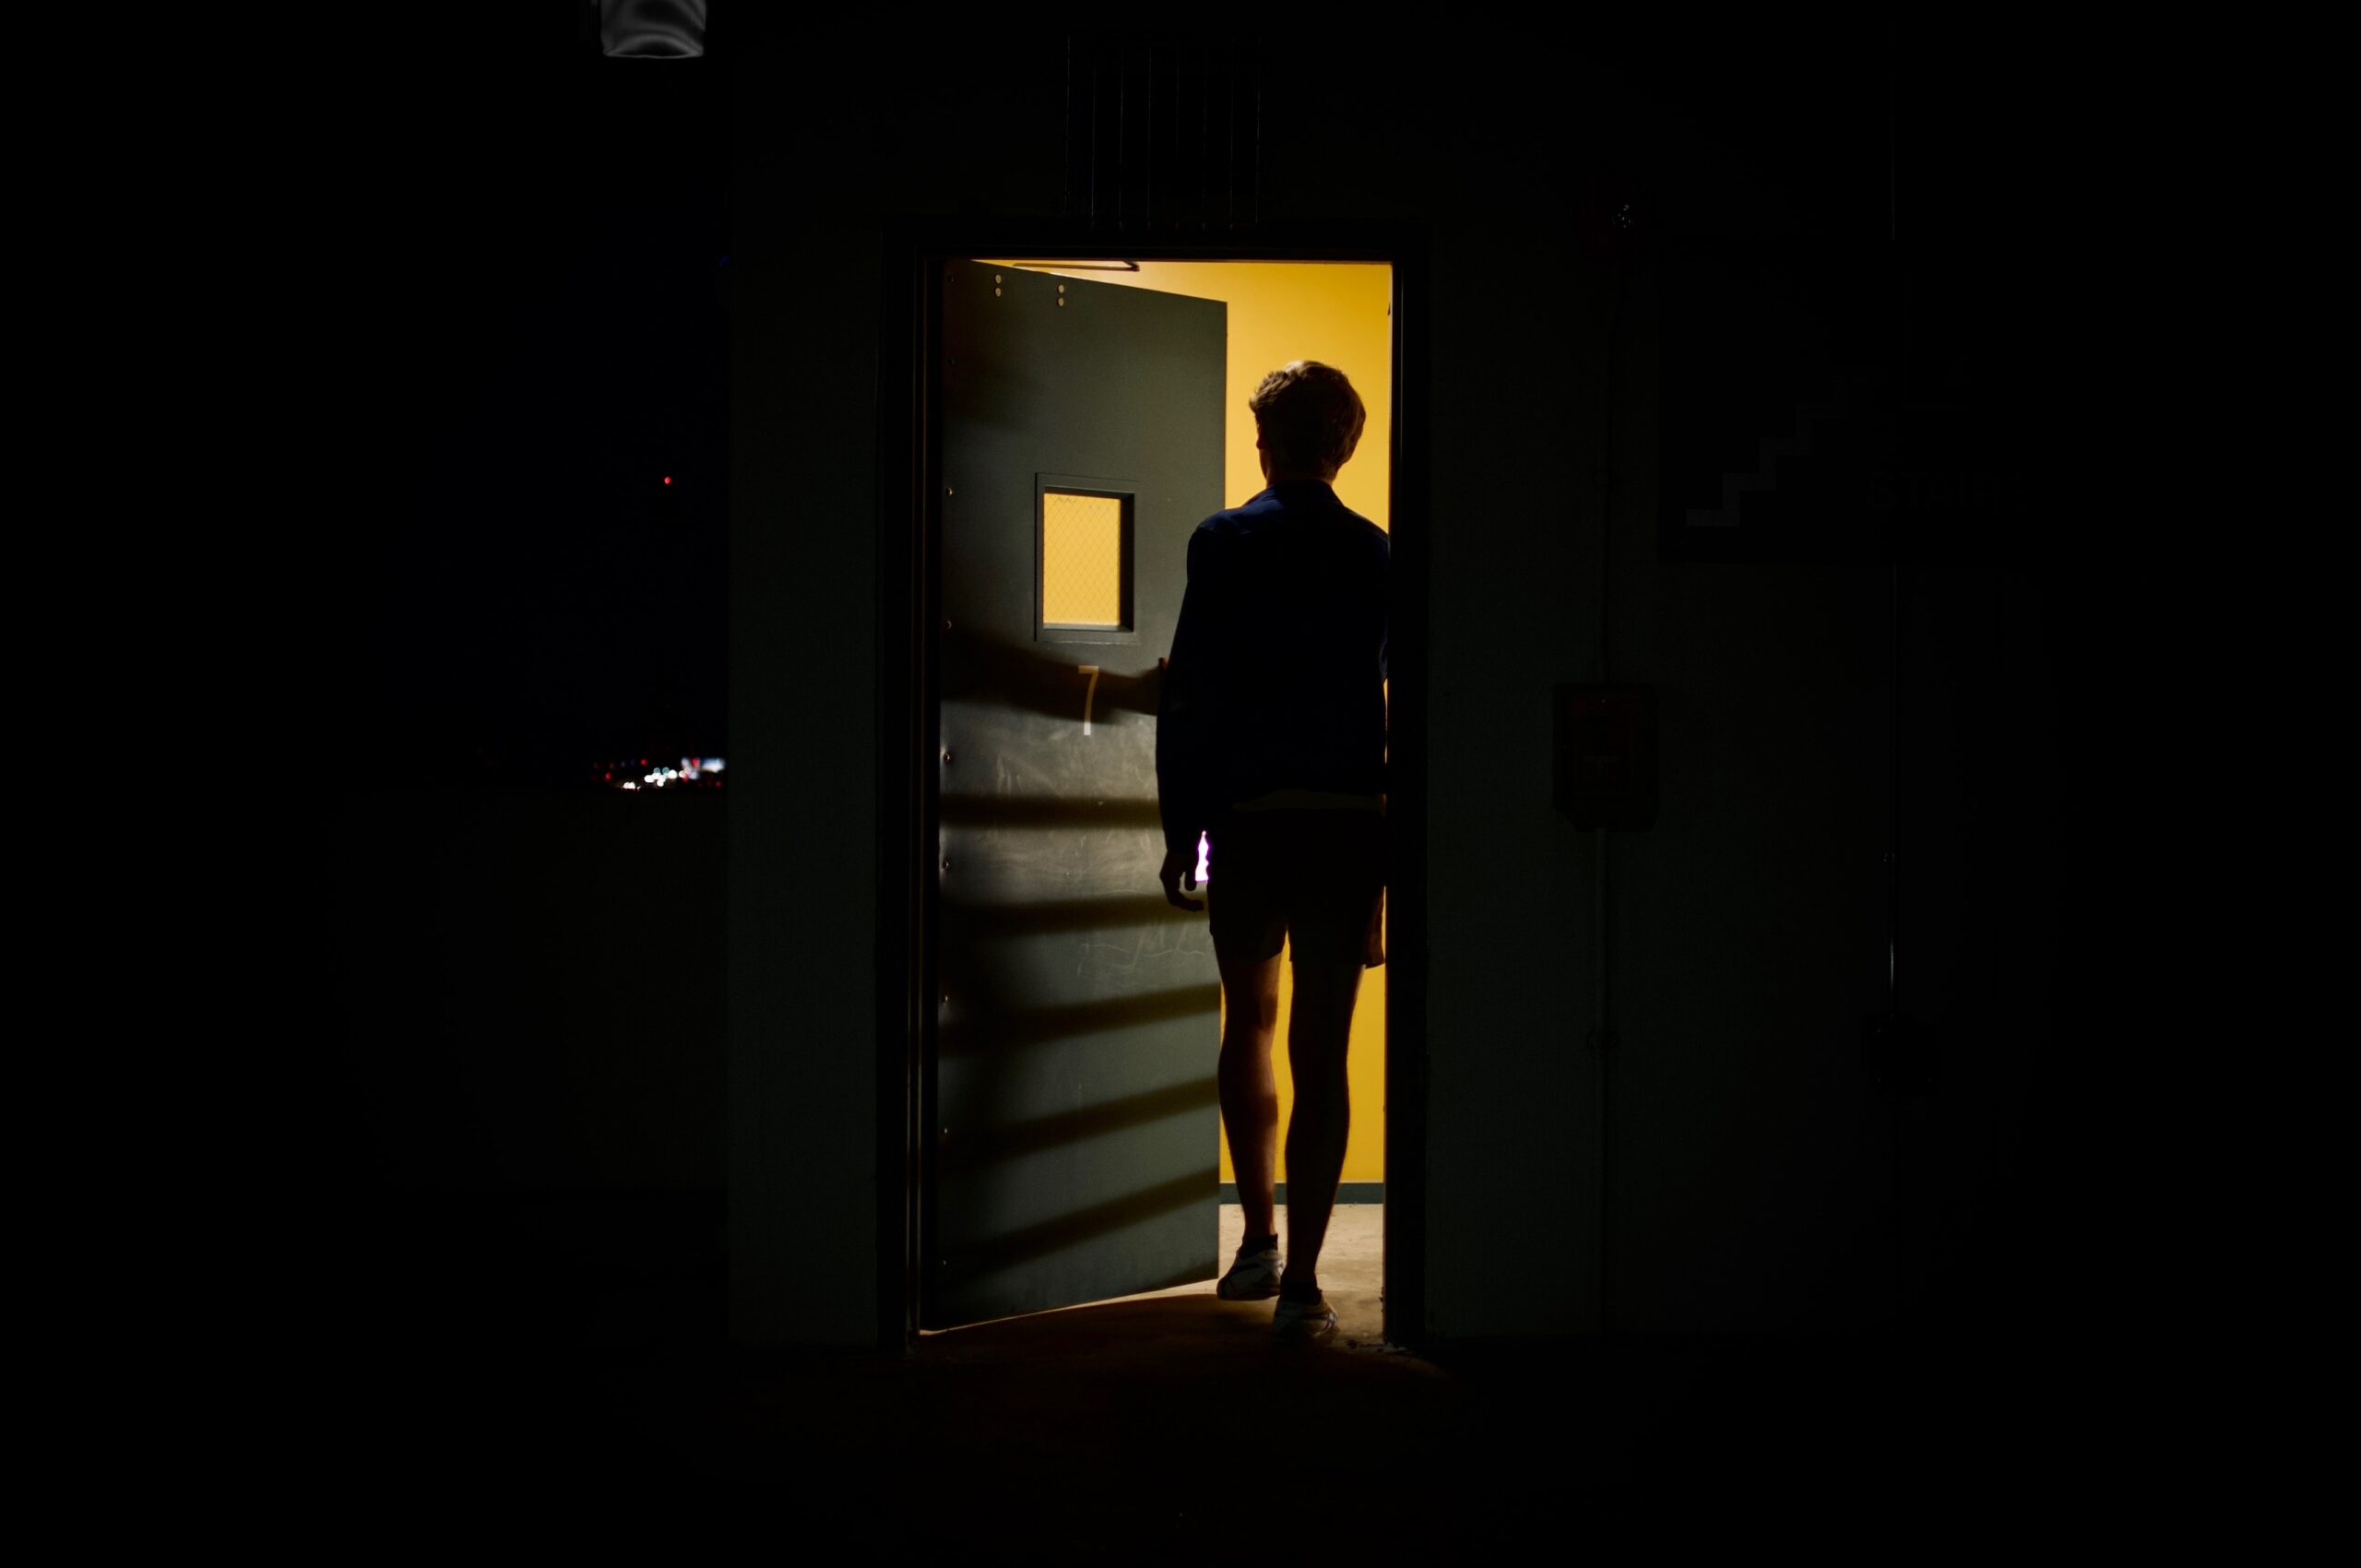 dark photo of person walking through door with yellow light